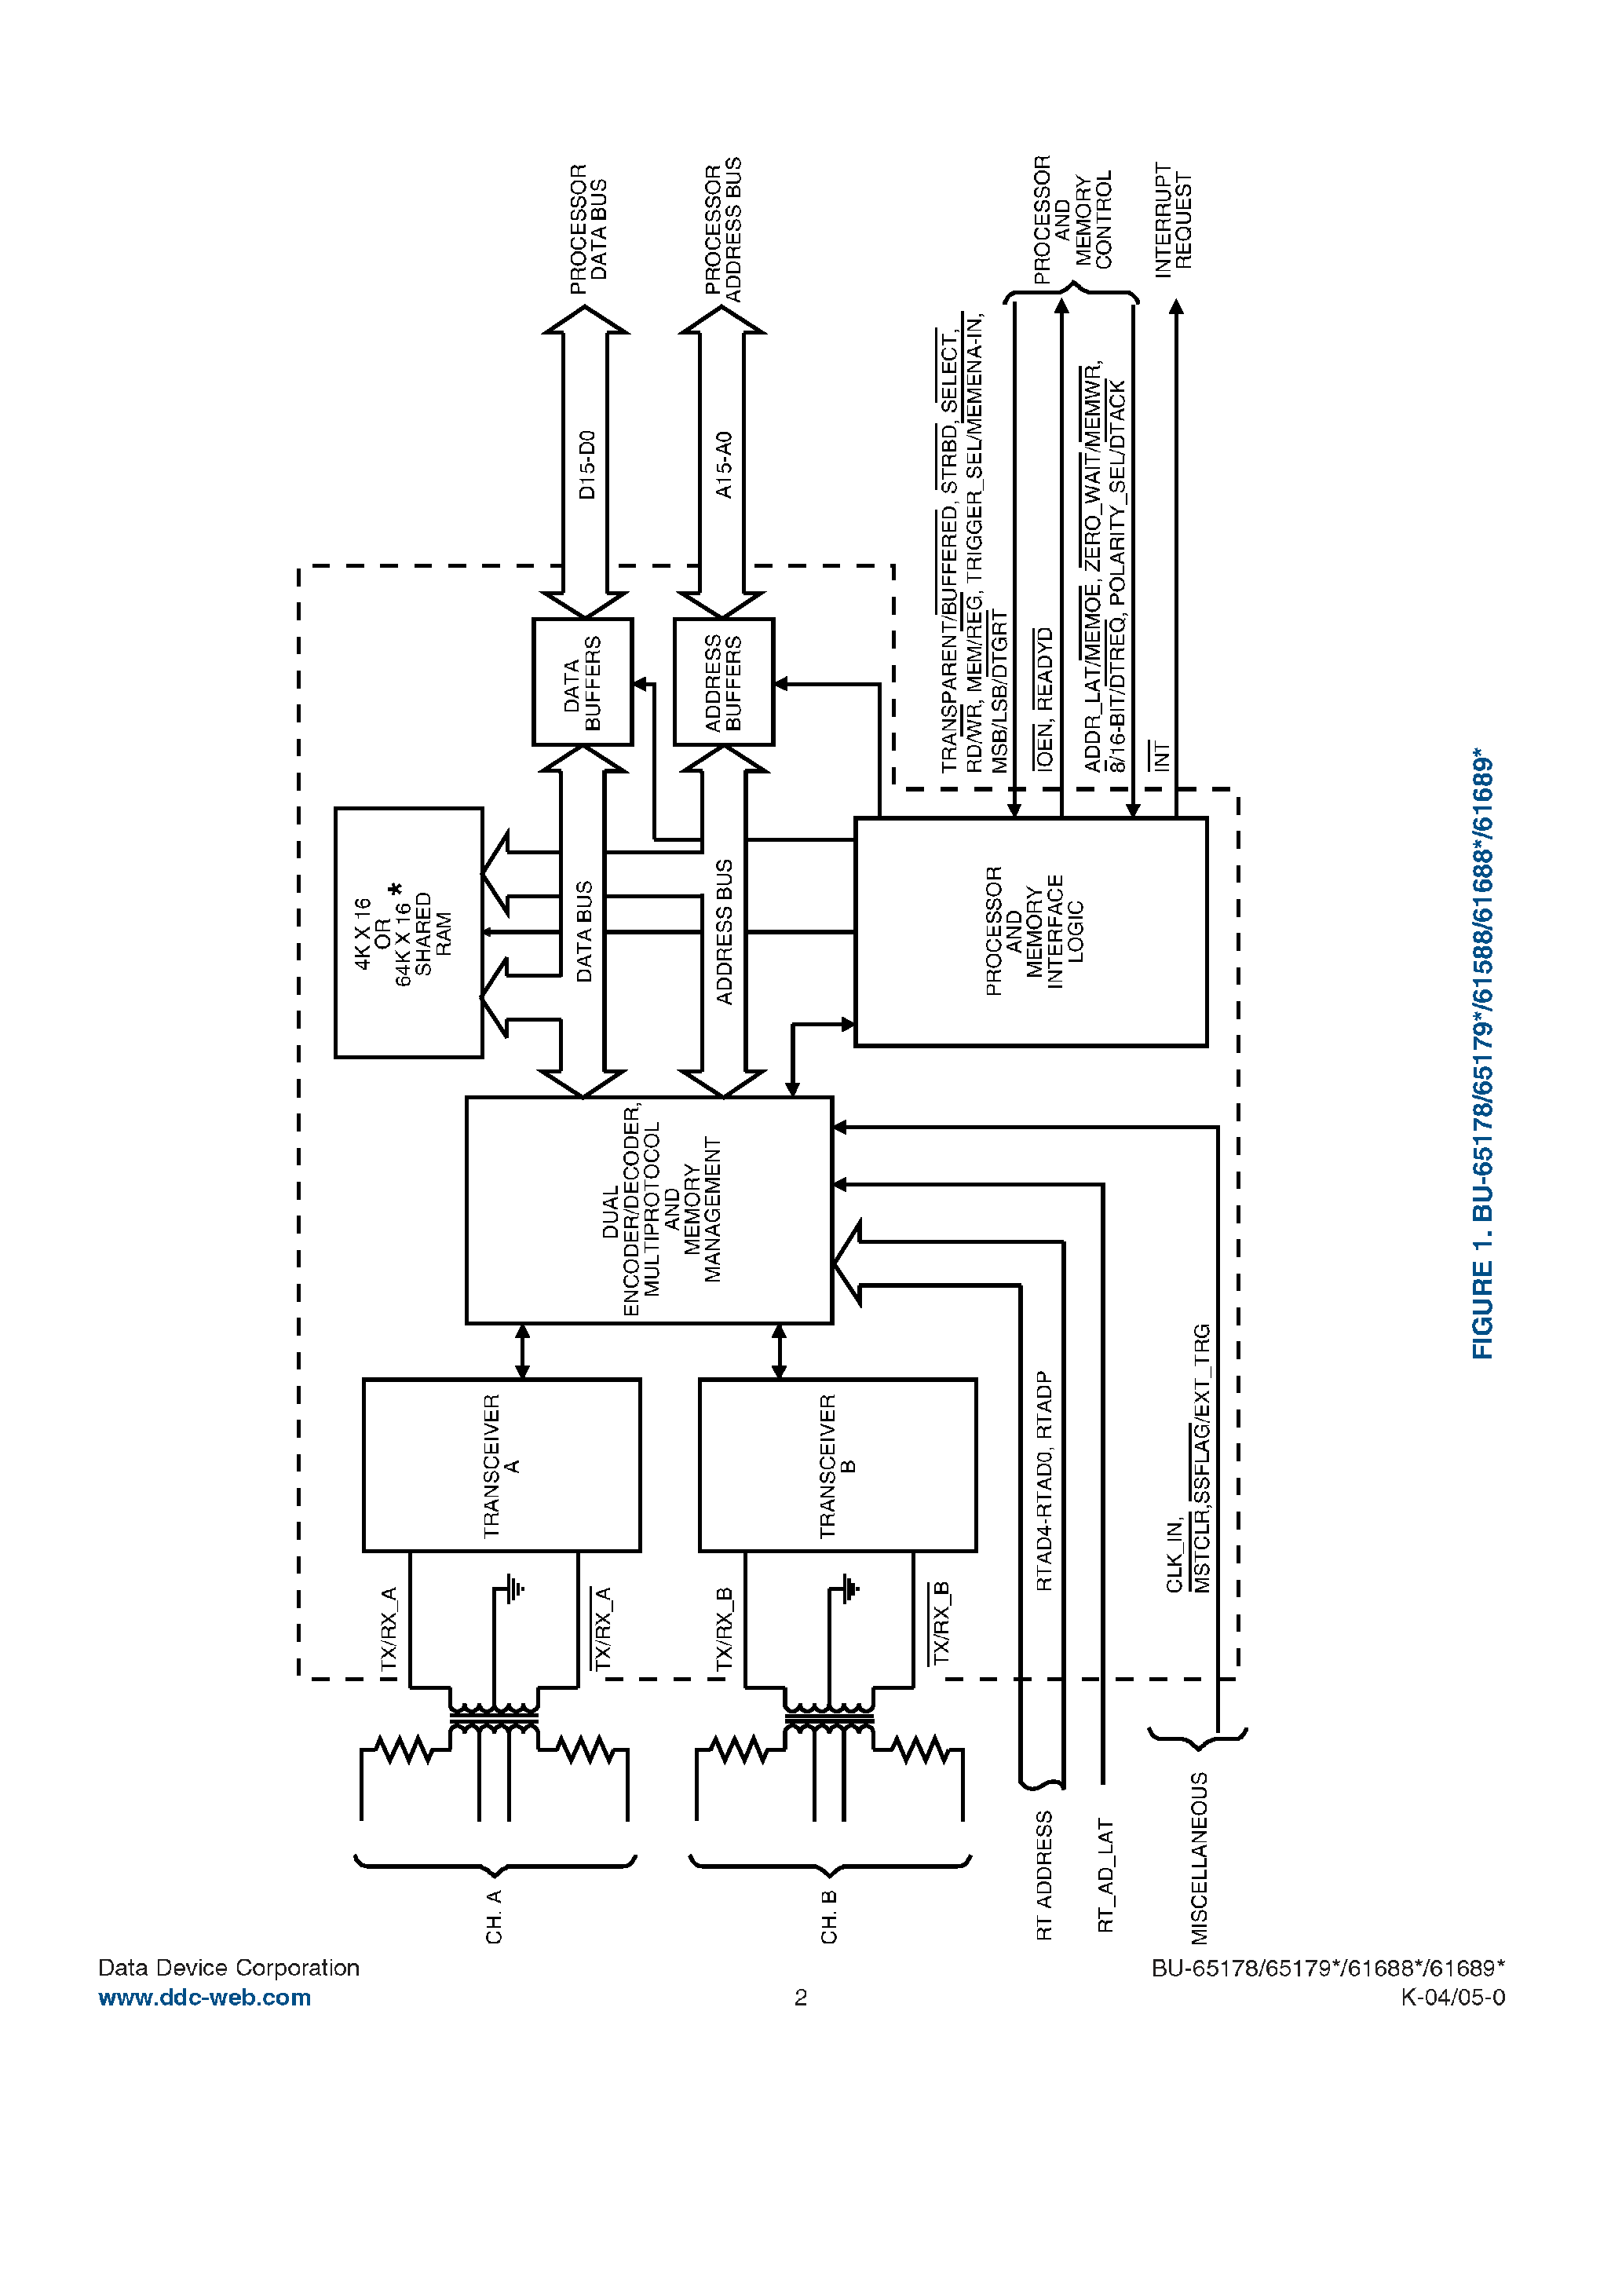 Datasheet BU61689 - Miniature Advanced Communication Engine and Mini-Ace Plus page 2